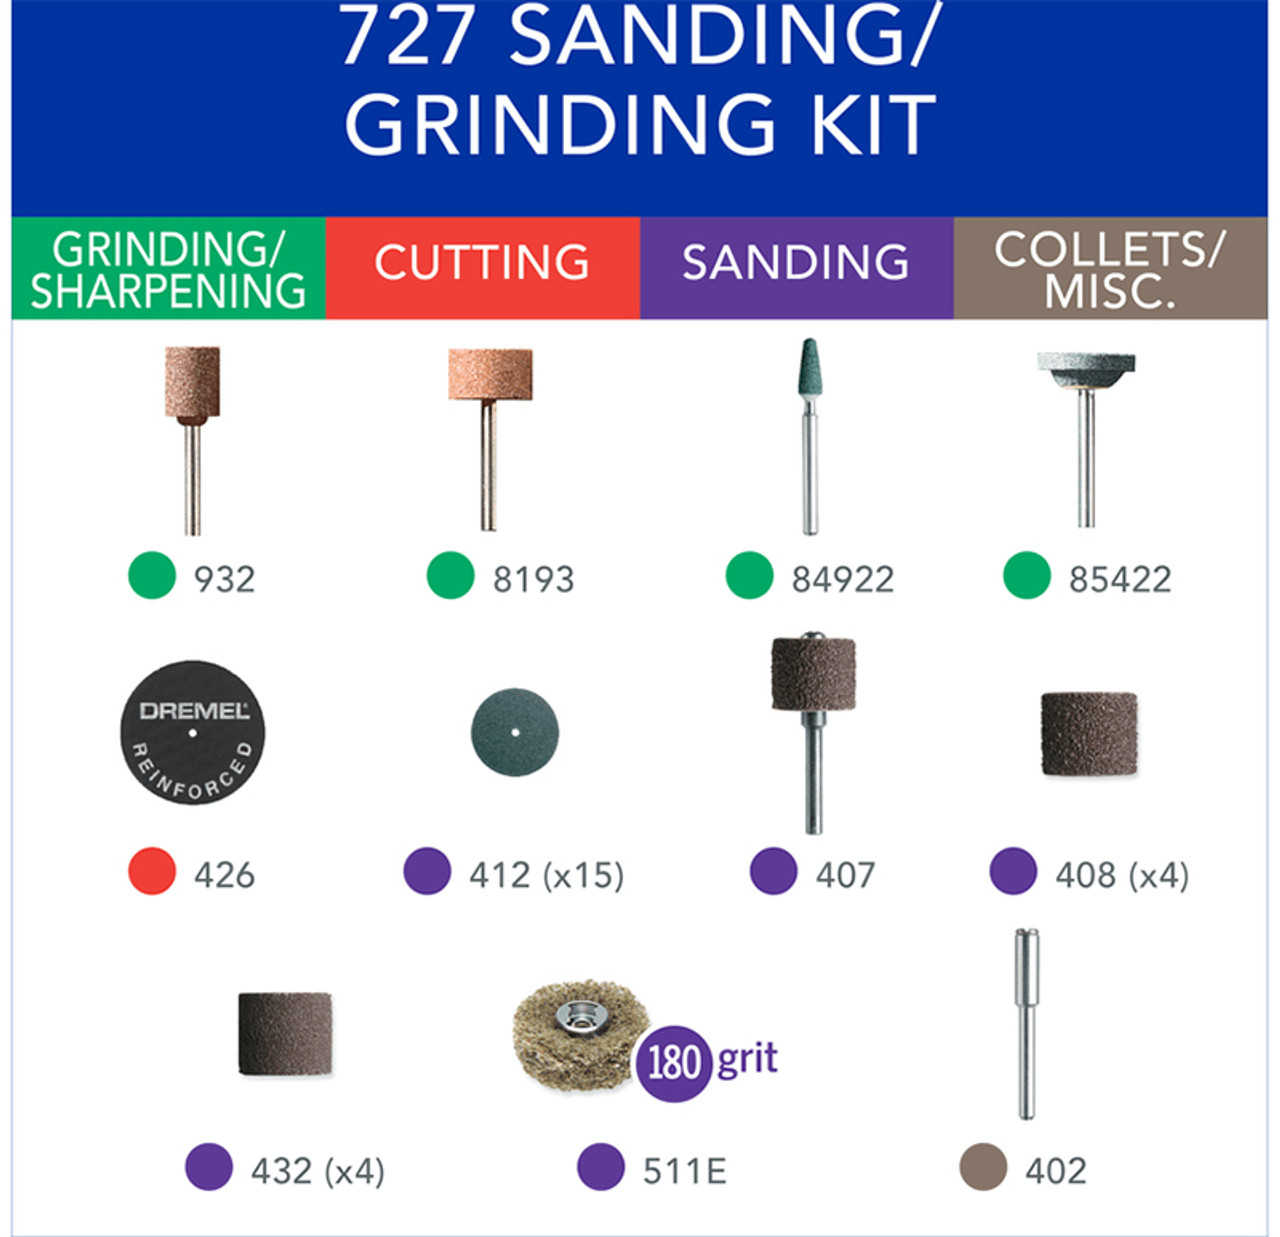 Dremel Sanding/Grinding Rotary Accessory Micro Kit (31-Piece) 727